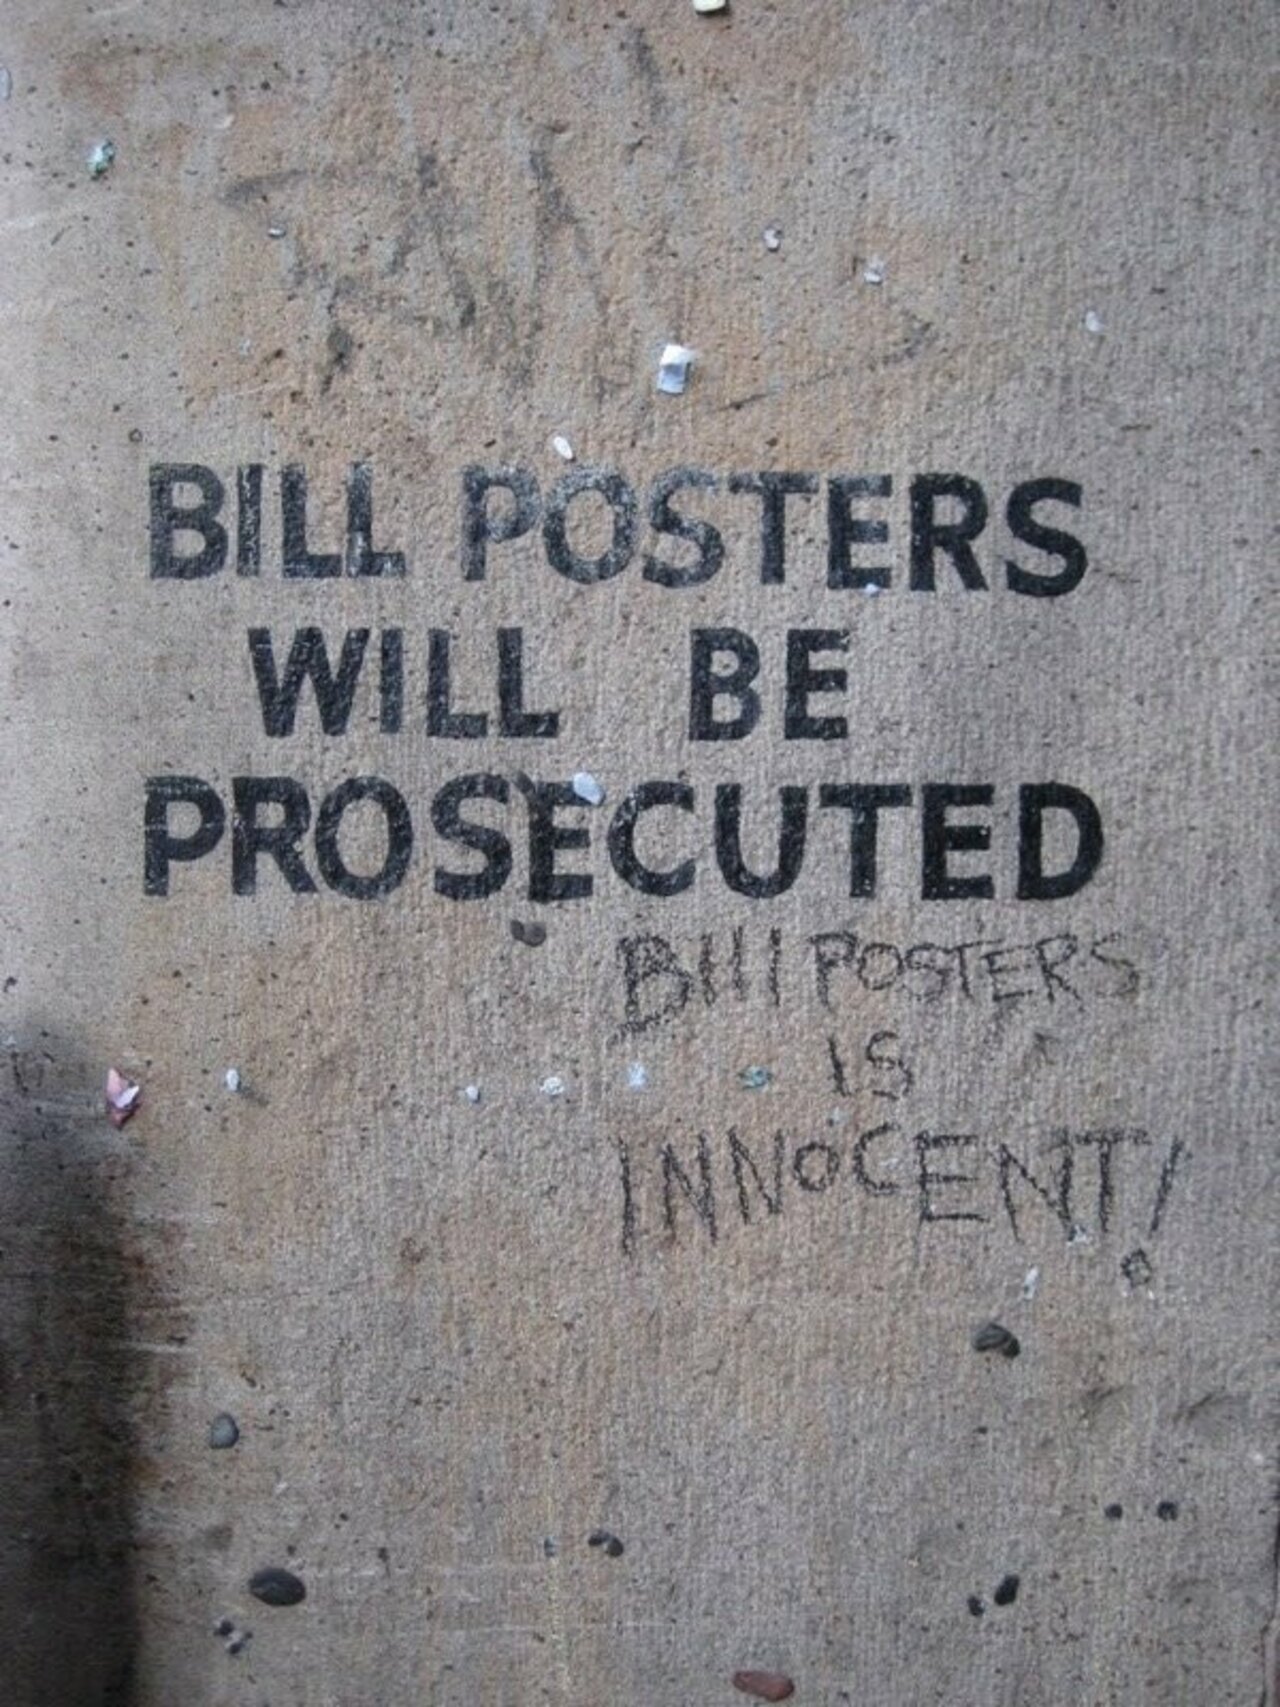 Justice for Bill #innocent #JusticeLeague #justice #streetart #Banksy https://t.co/NN9iMeTO6t